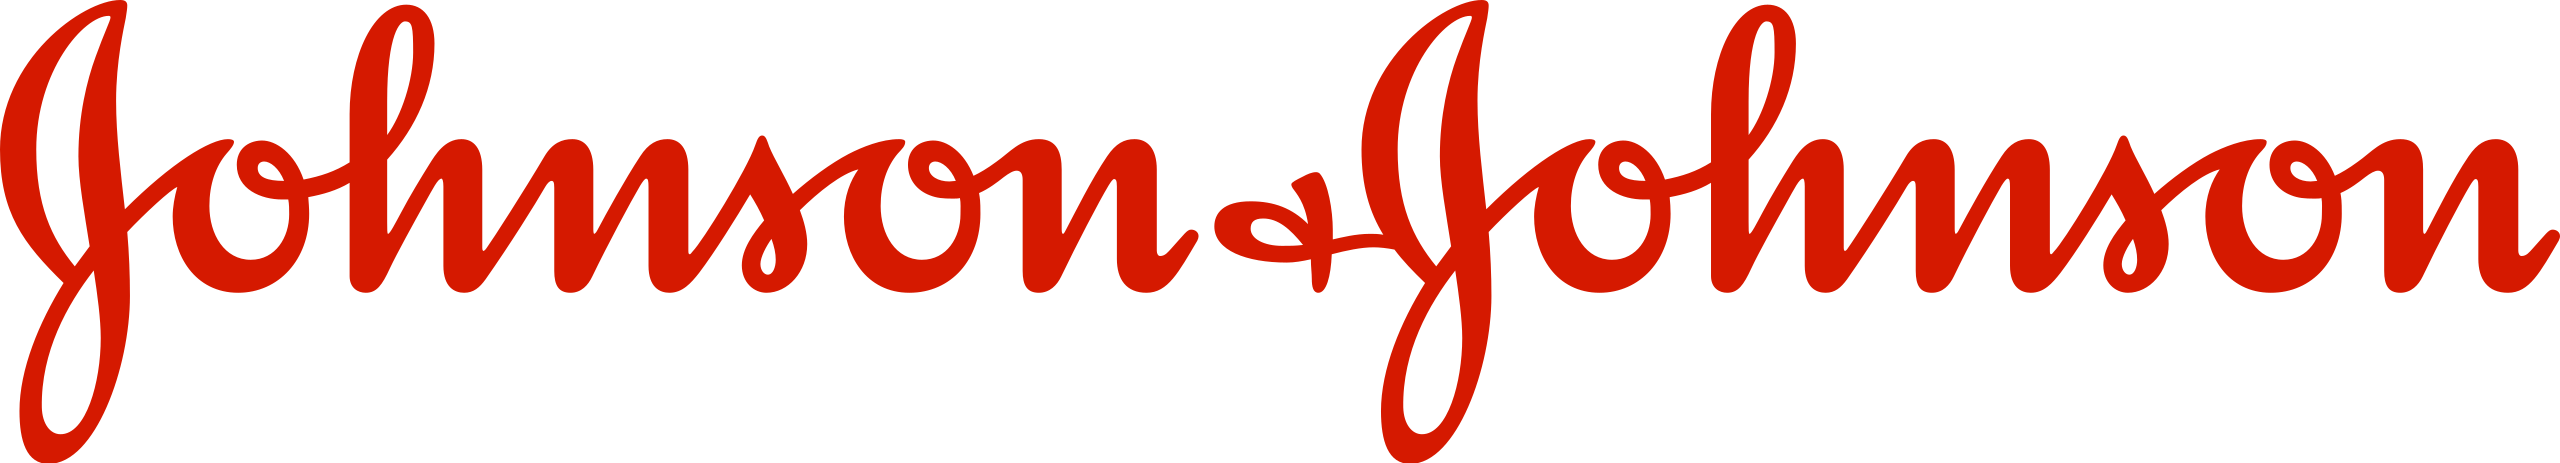 jj logo